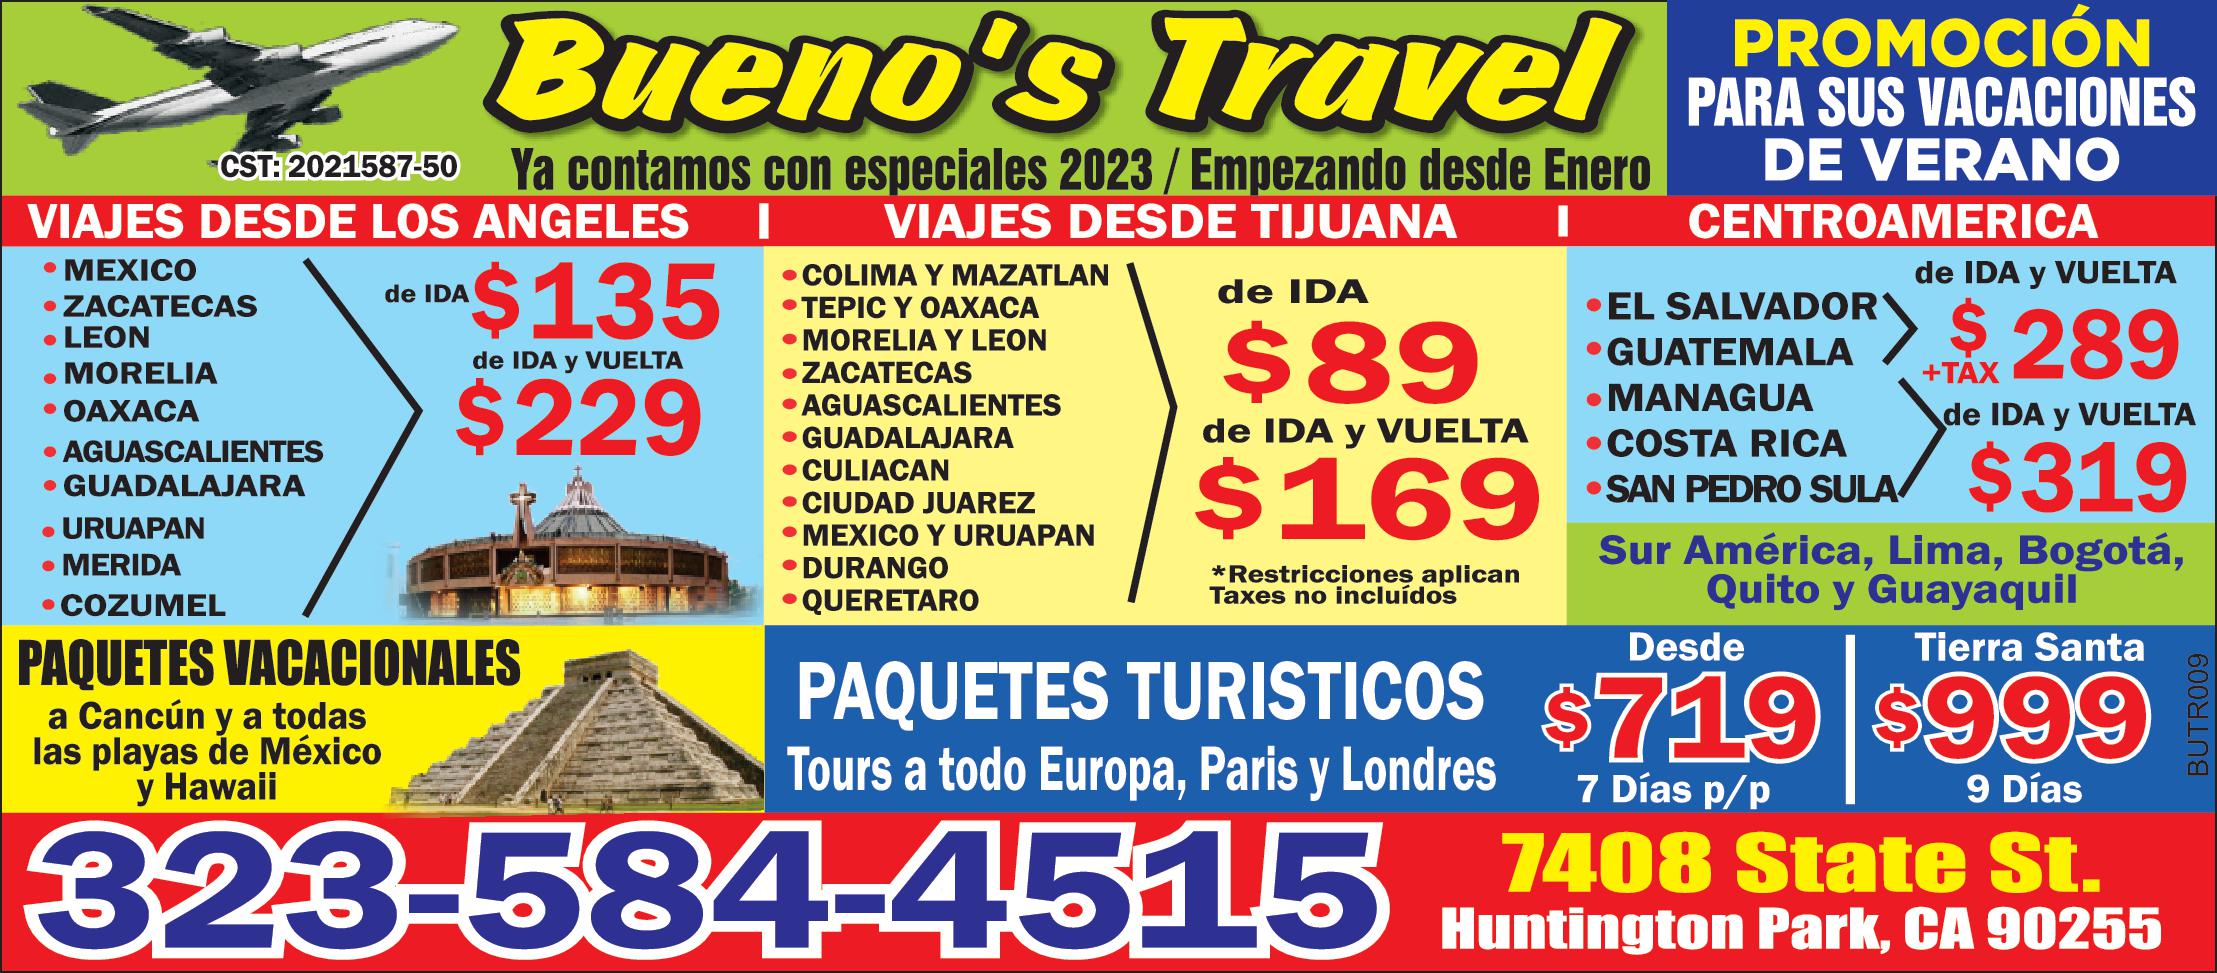 Buenos Travel